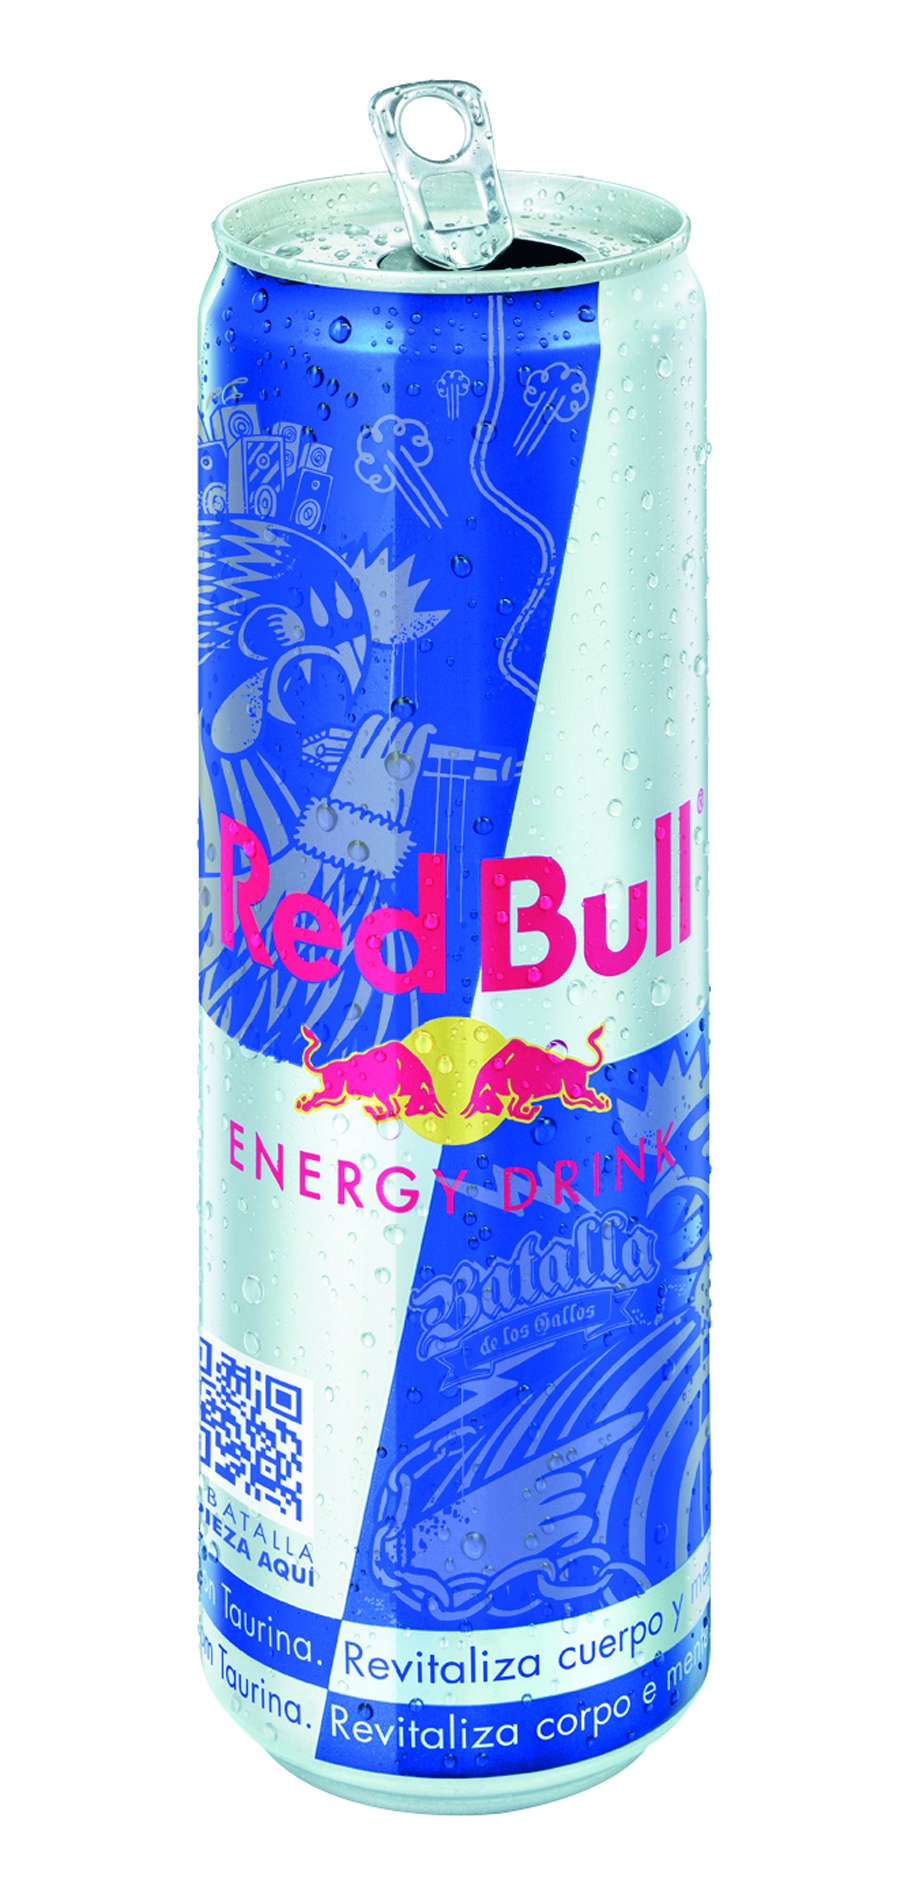 Red Bull customiza su lata